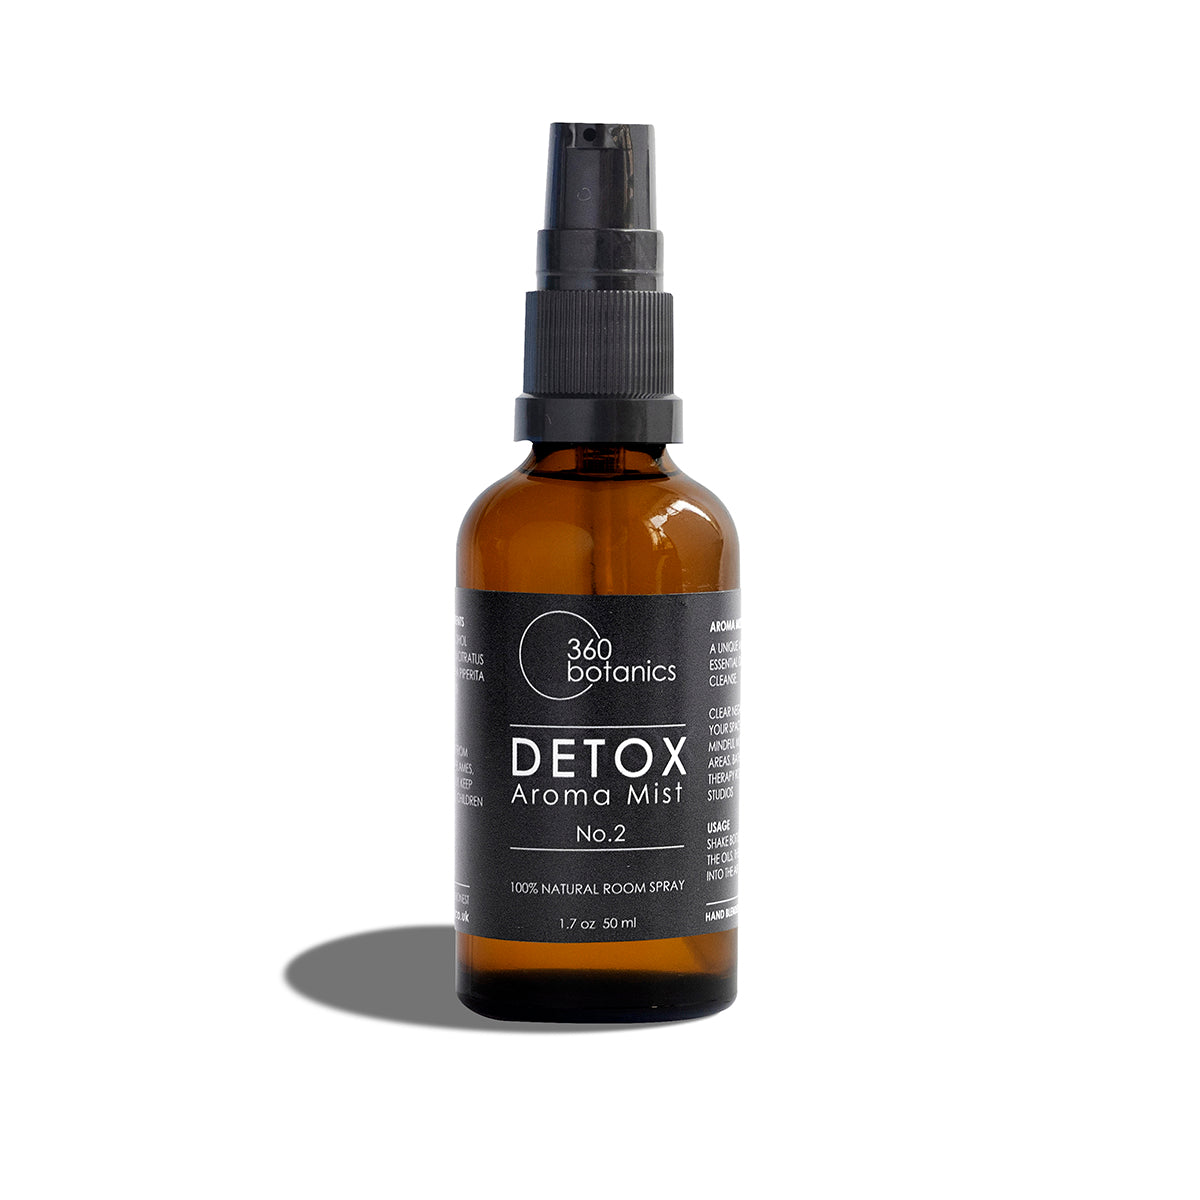 Detox - Aroma Mist – 360 Botanics